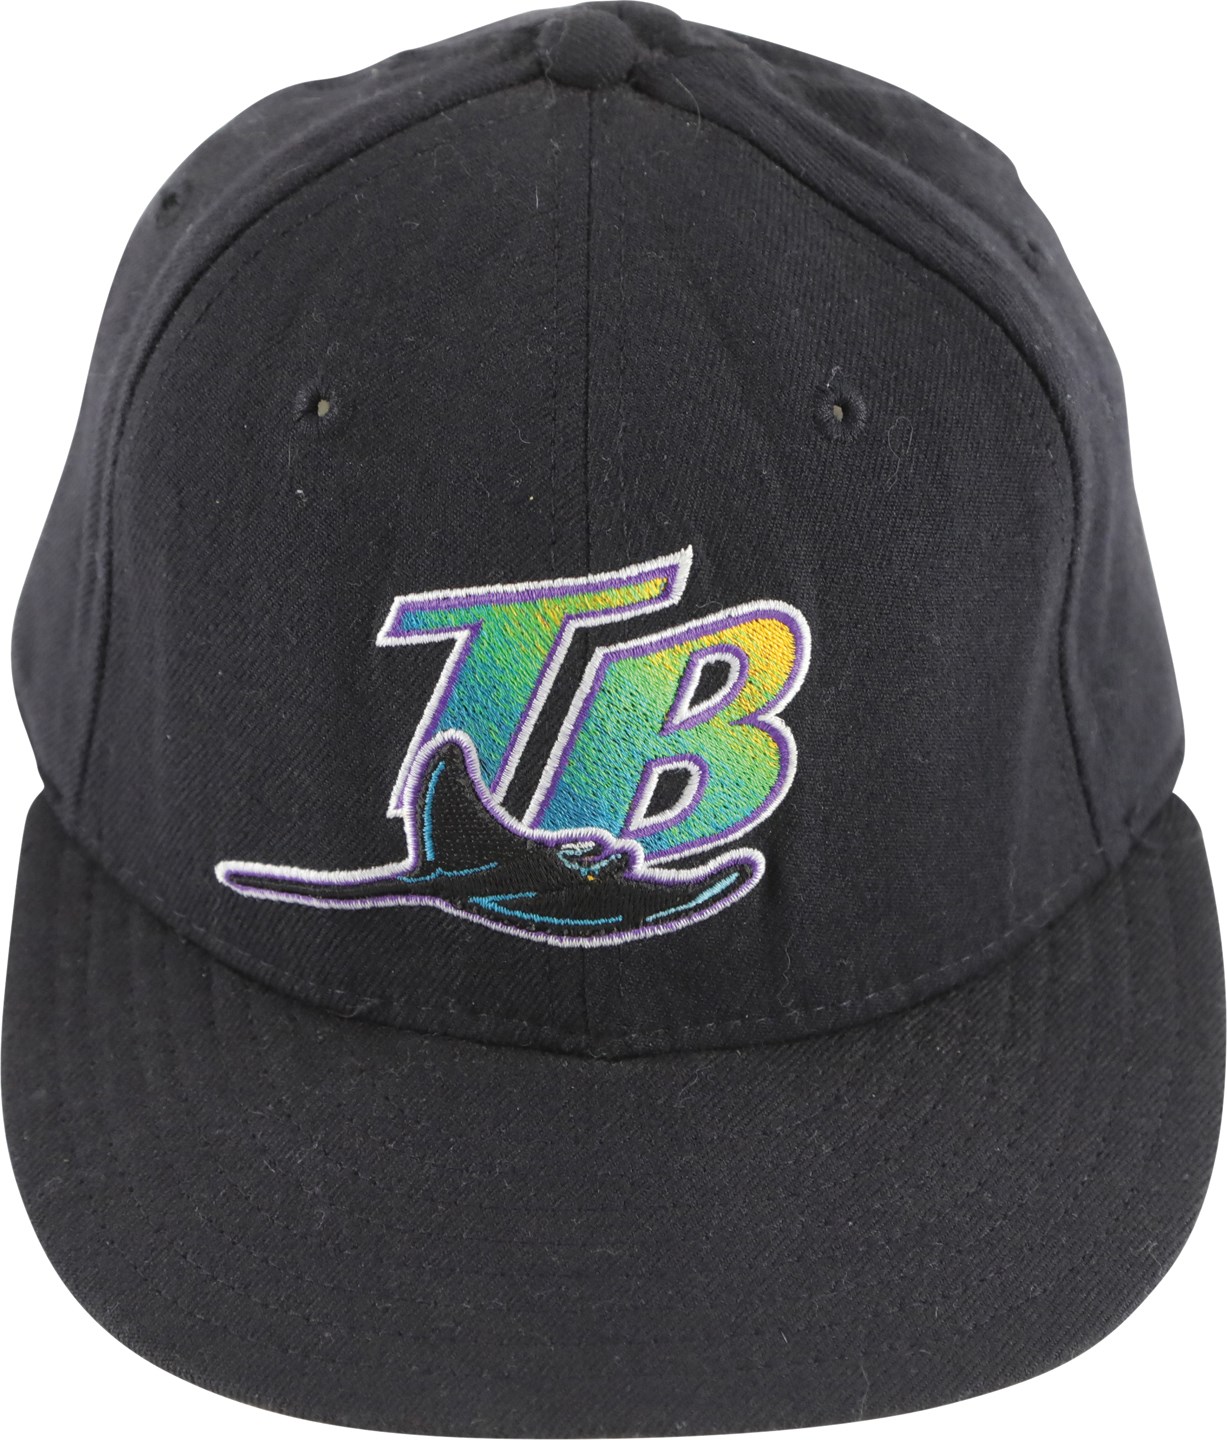 - Circa 1999 Wade Boggs Tampa Bay Devil Rays Game Used Hat